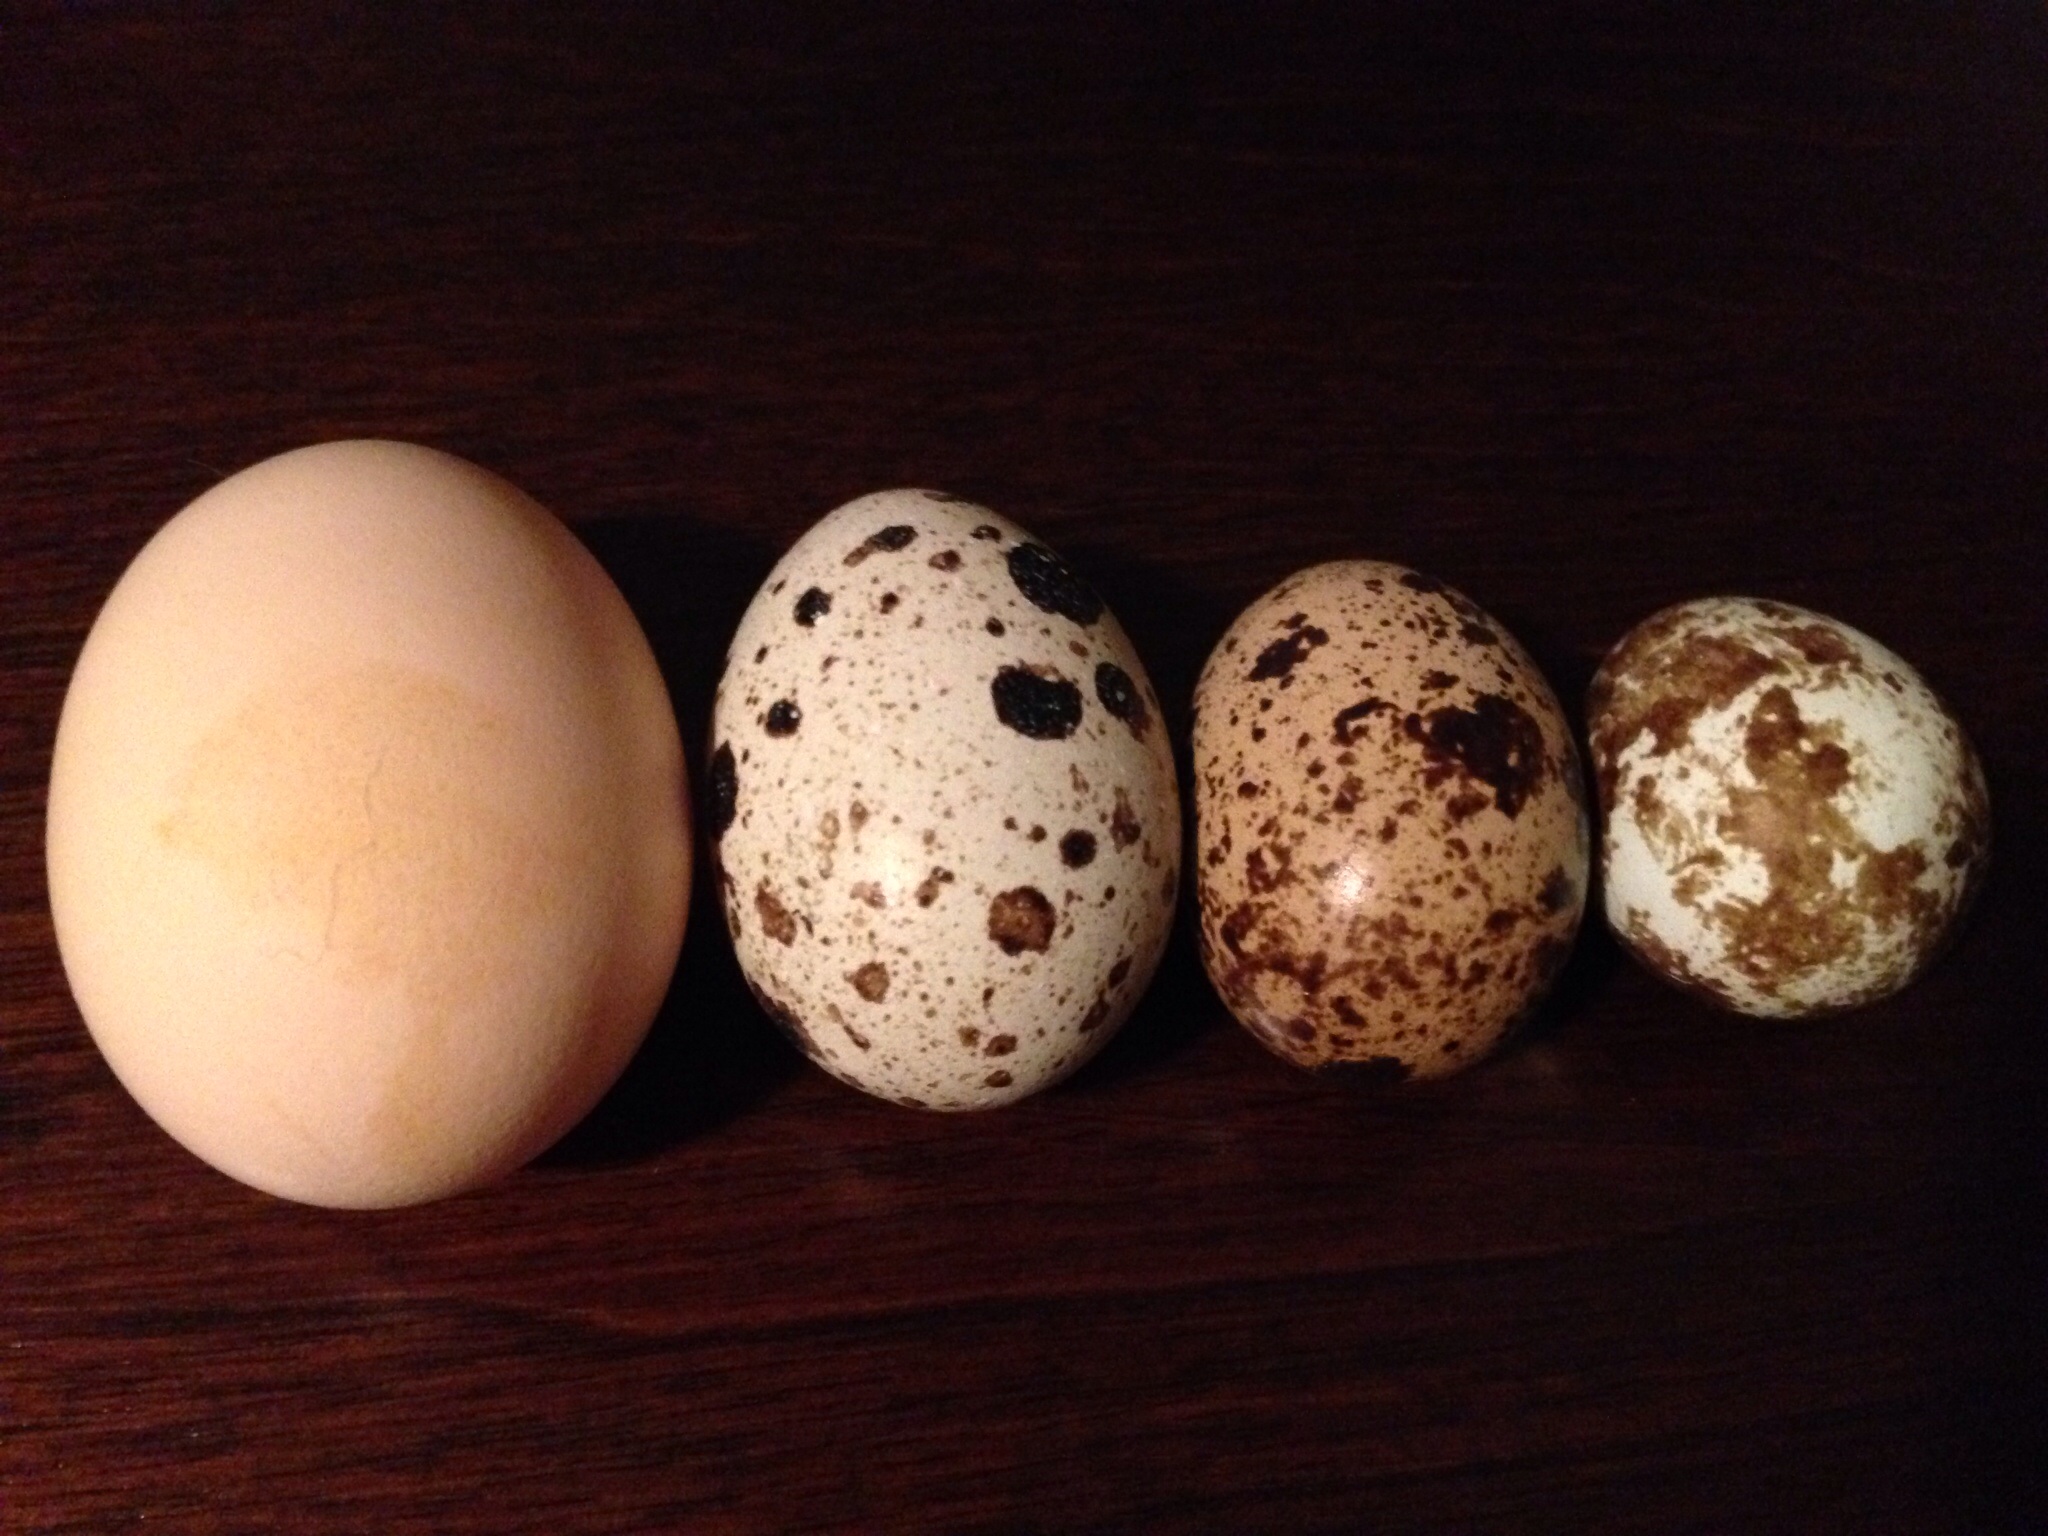 Egg comparison: ( left-right) Silkie egg @ 1.30 oz, Texas A&M @ .75 oz, Texas A&M @ .45 oz & Coturnix @ 35 oz